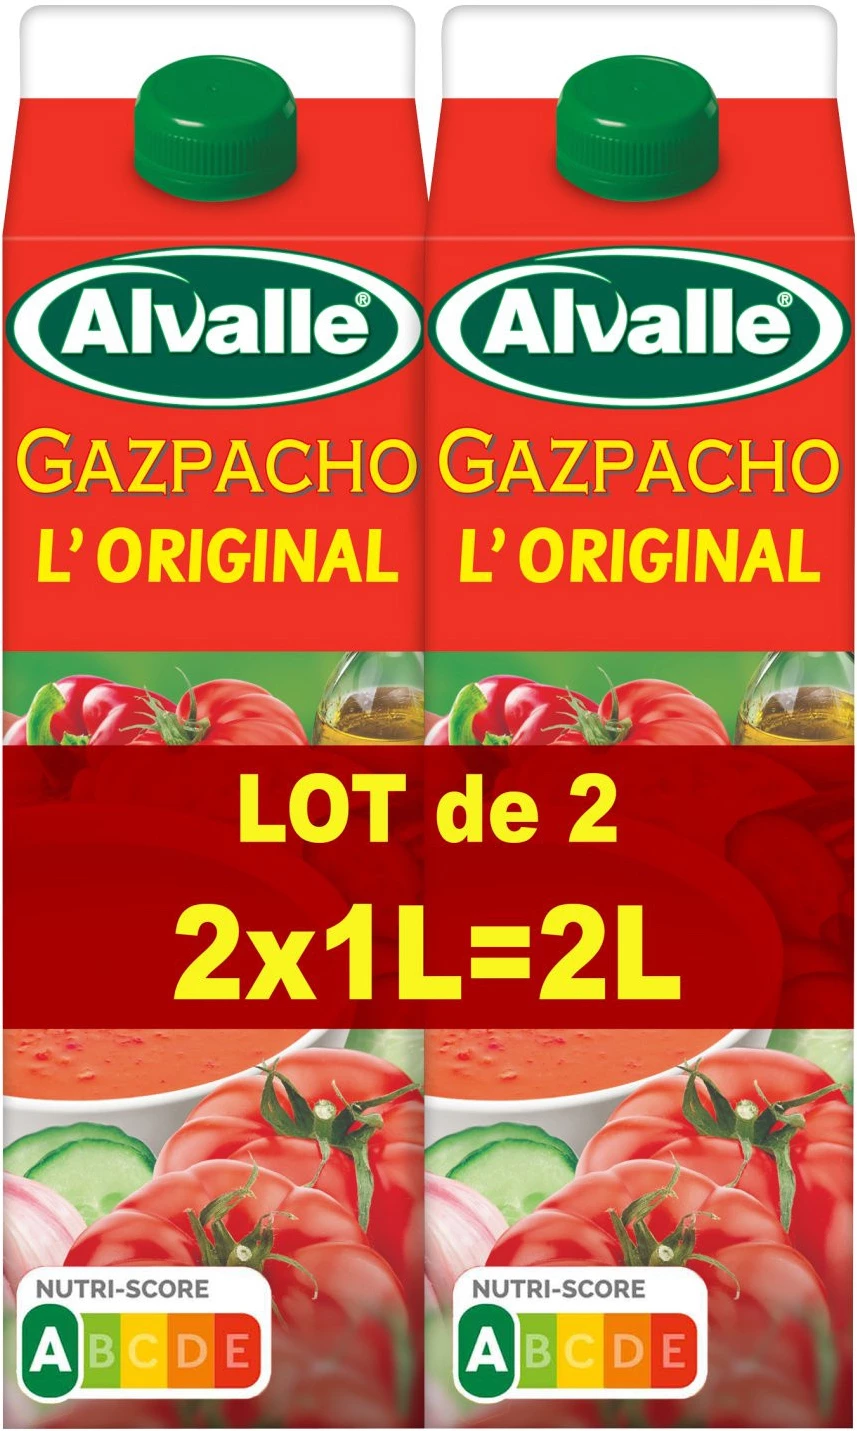 Alvalle Gazpacho 2x1l